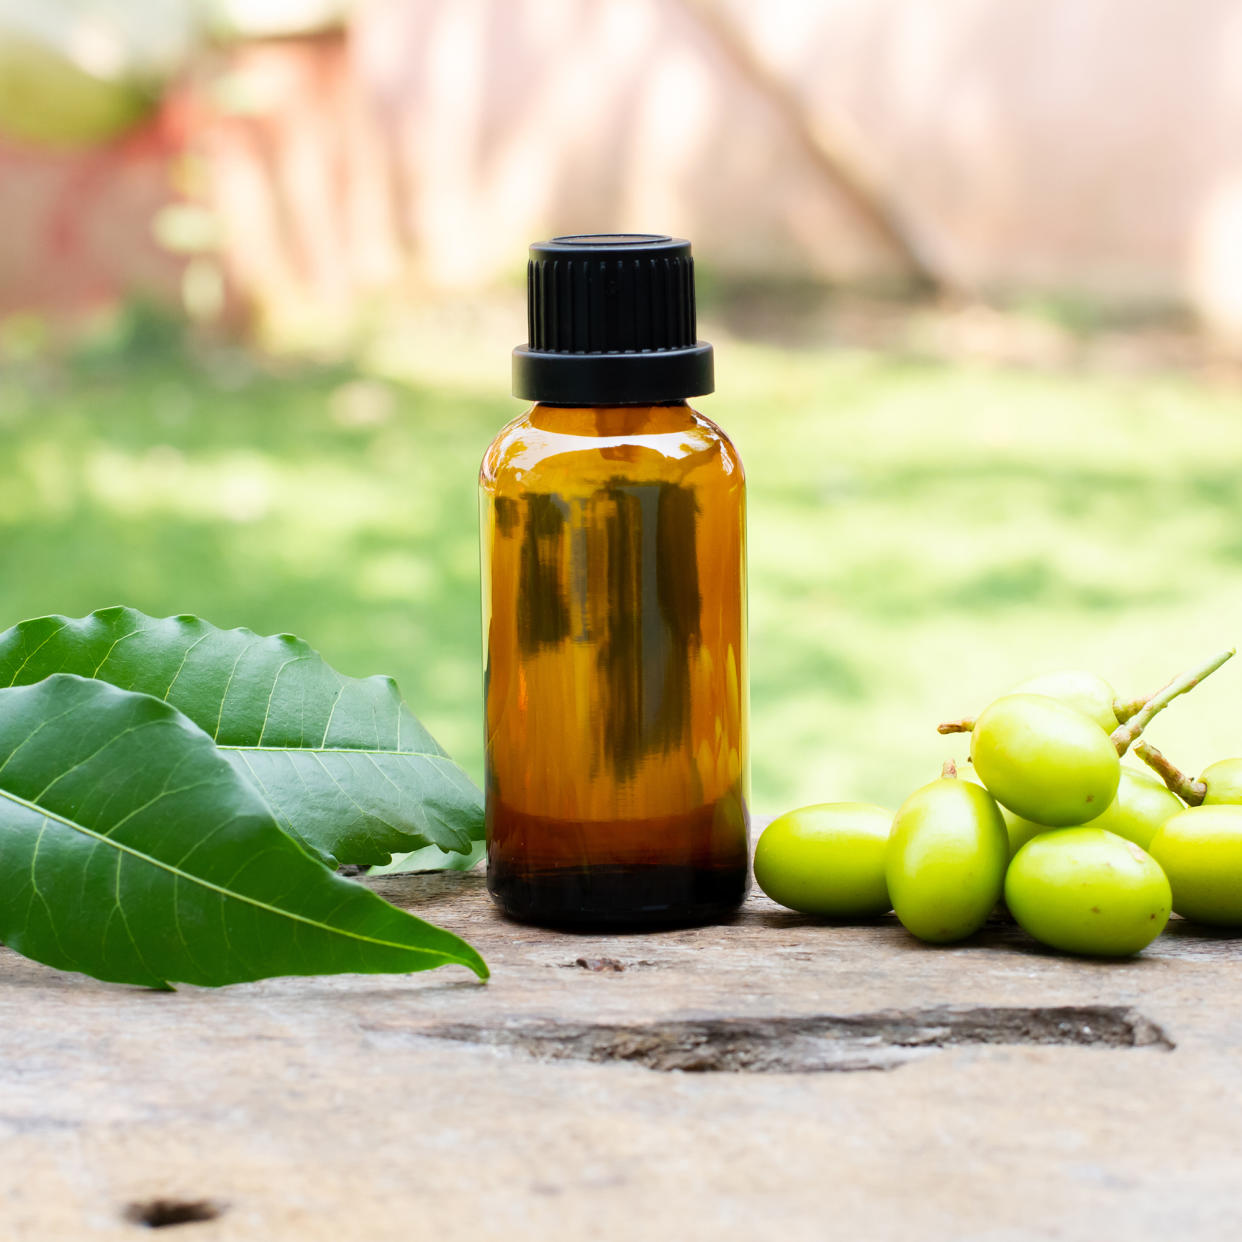  Bottle of neem oil beside leaves and berries. 